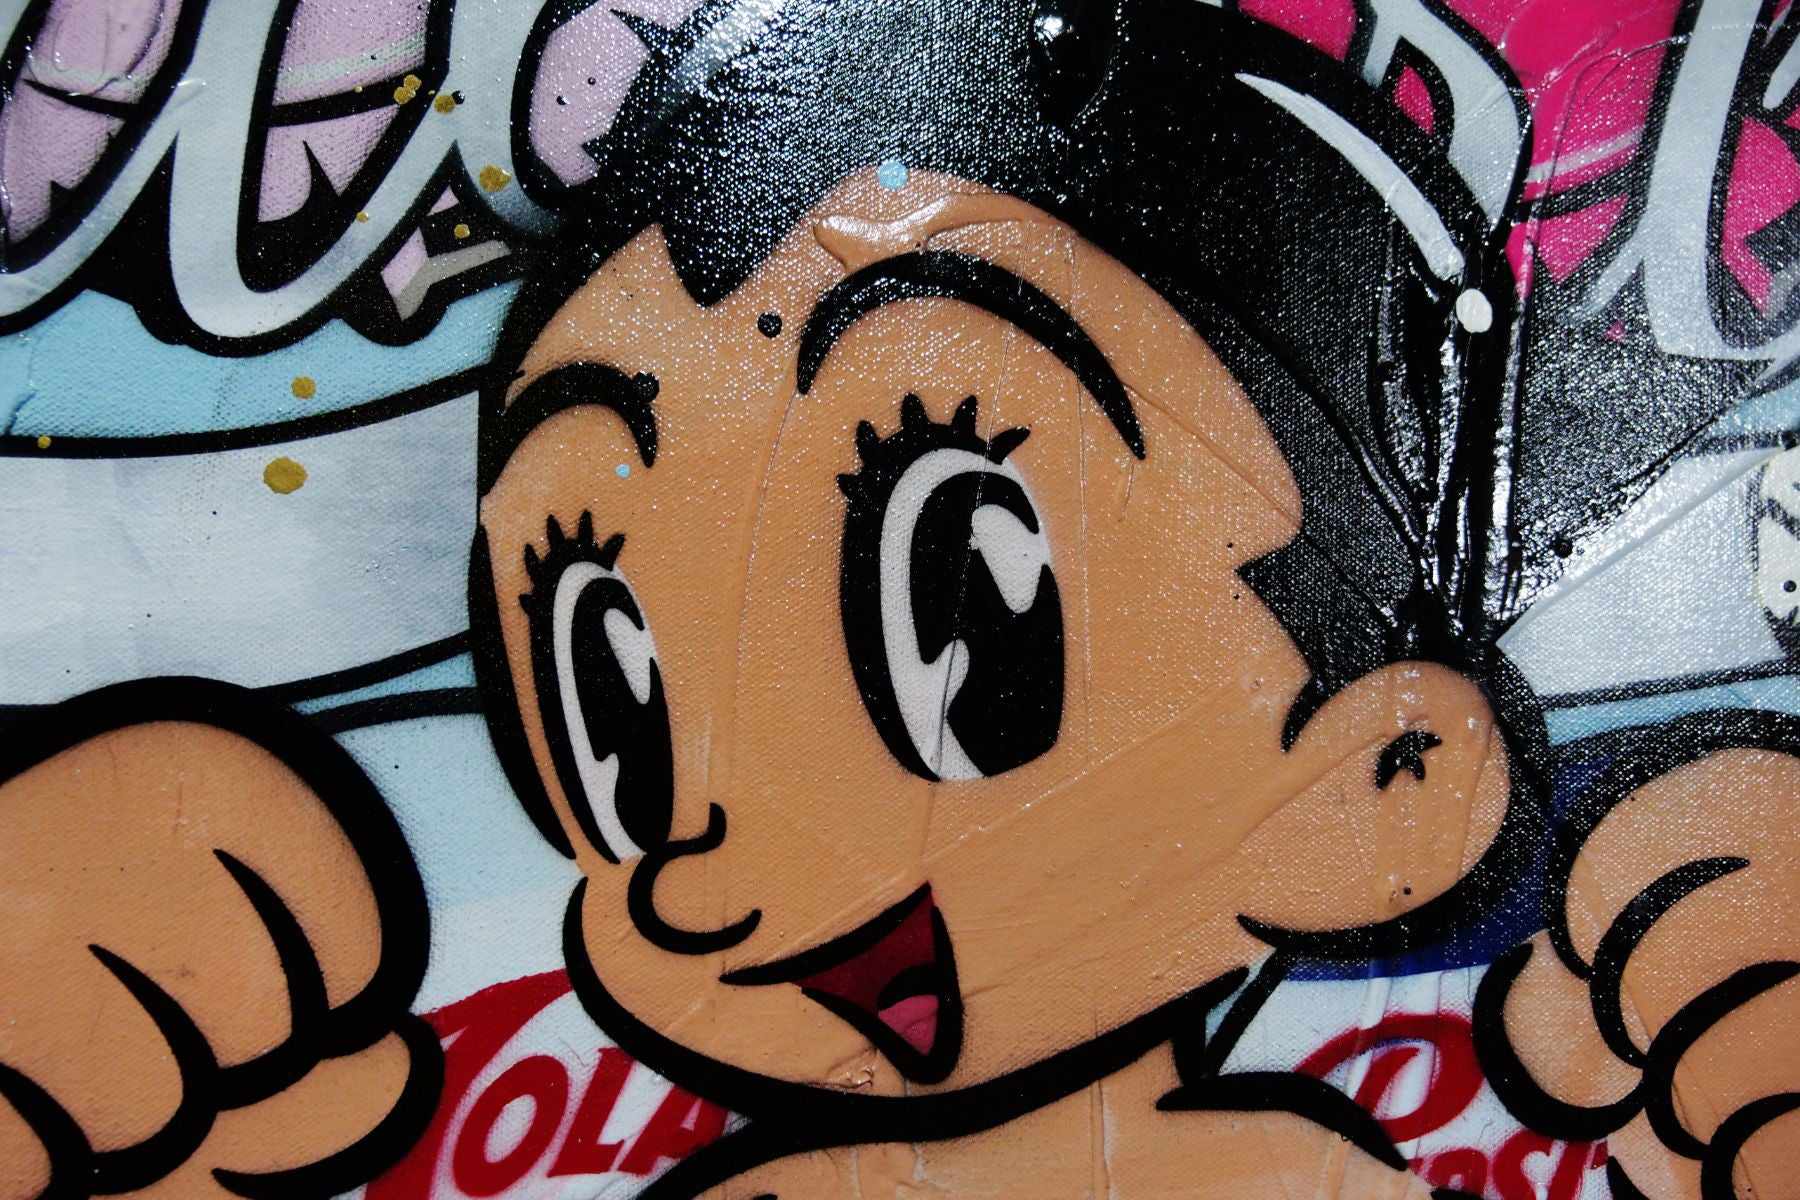 Astro 140cm x 100cm Astro Boy Textured Urban Pop Art Painting (SOLD)